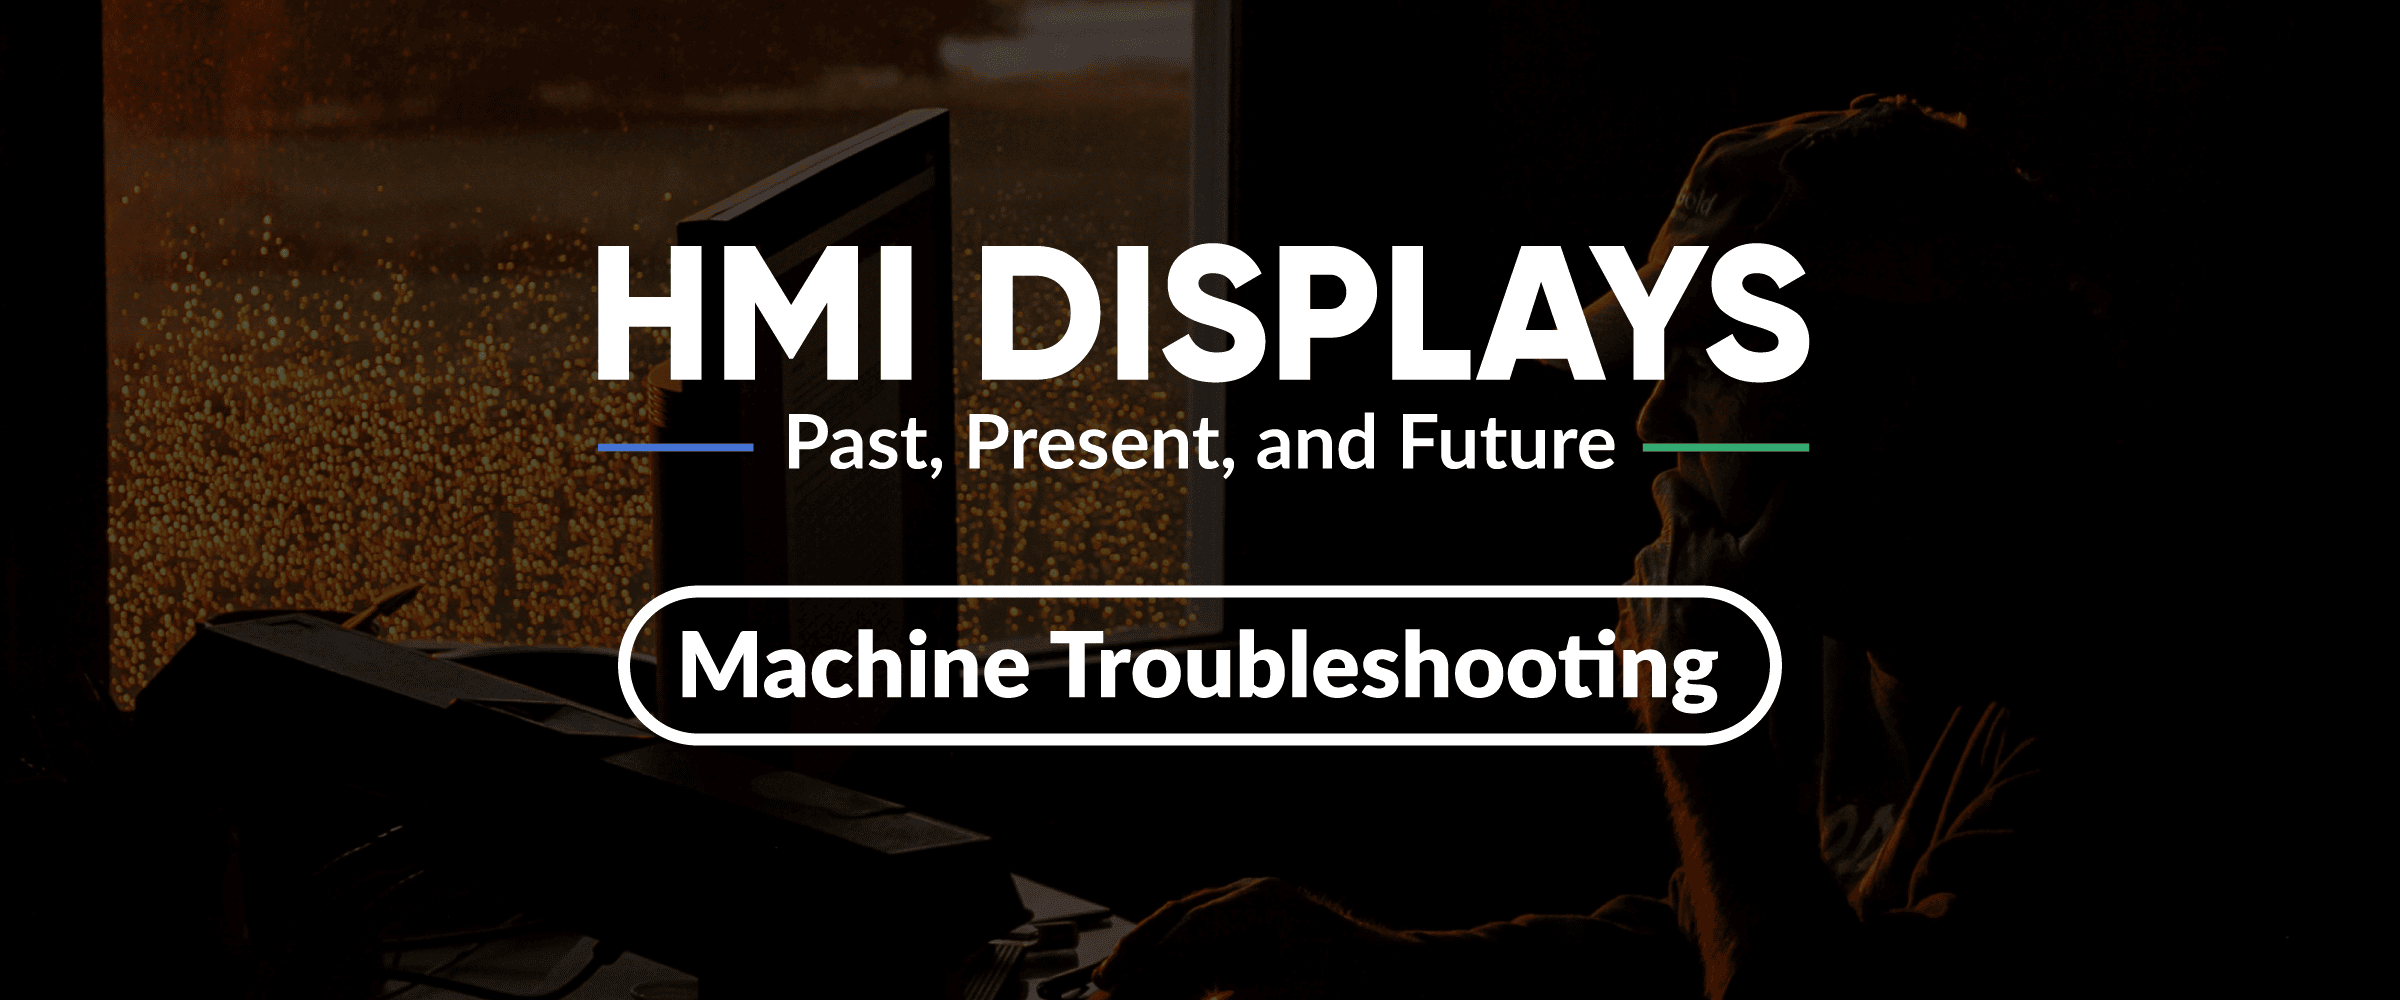 HMI Display machine troubleshooting history